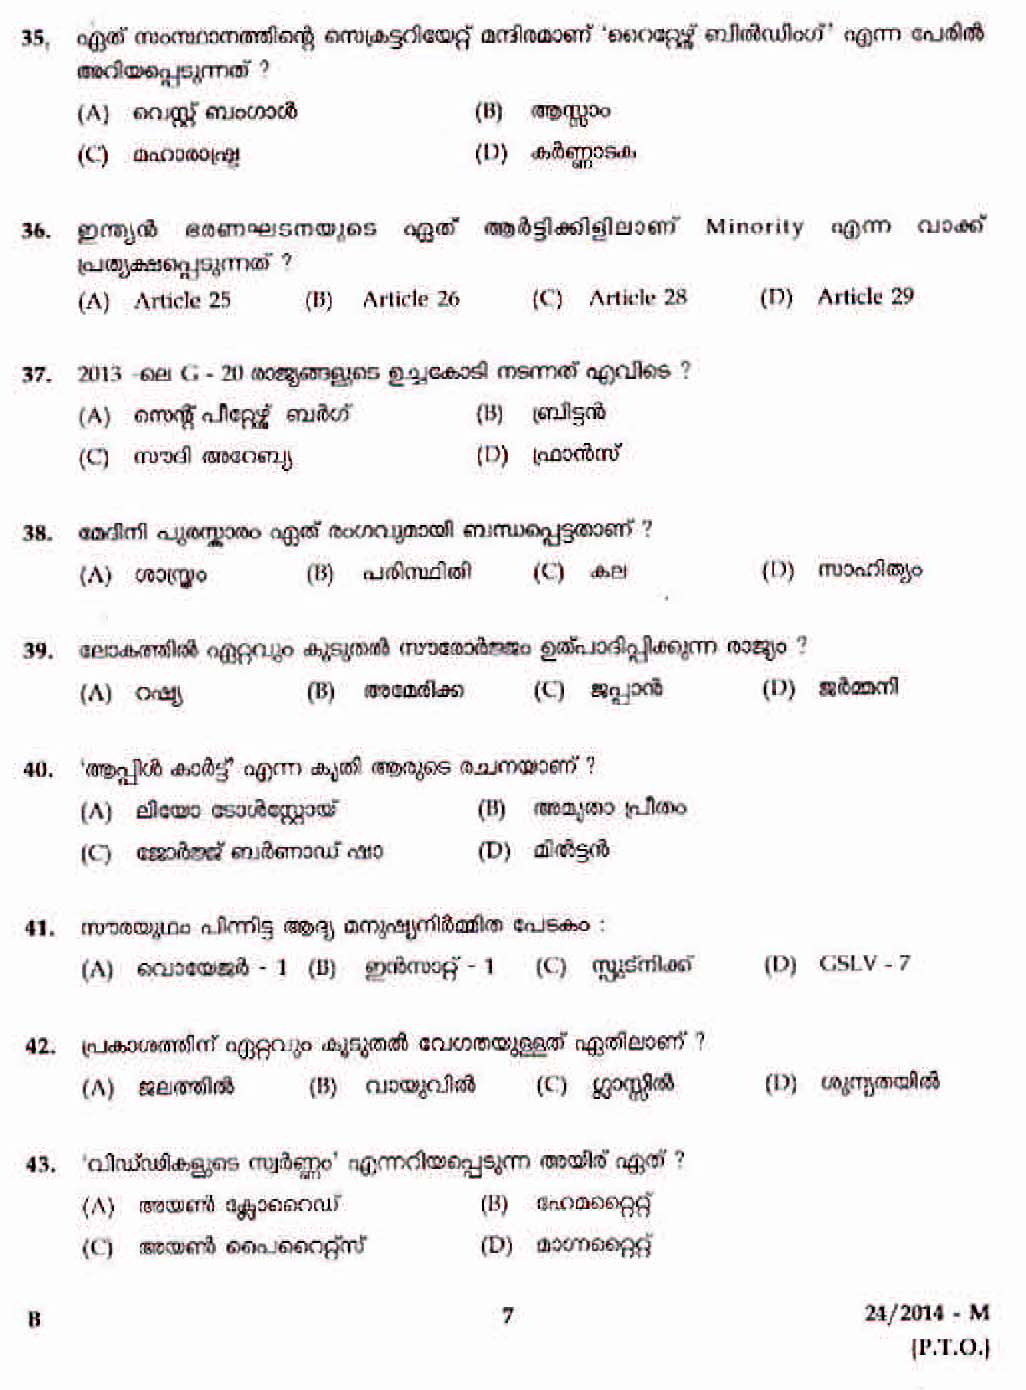 LD Clerk Malappuram Question Paper Malayalam 2014 Paper Code 242014 M 3